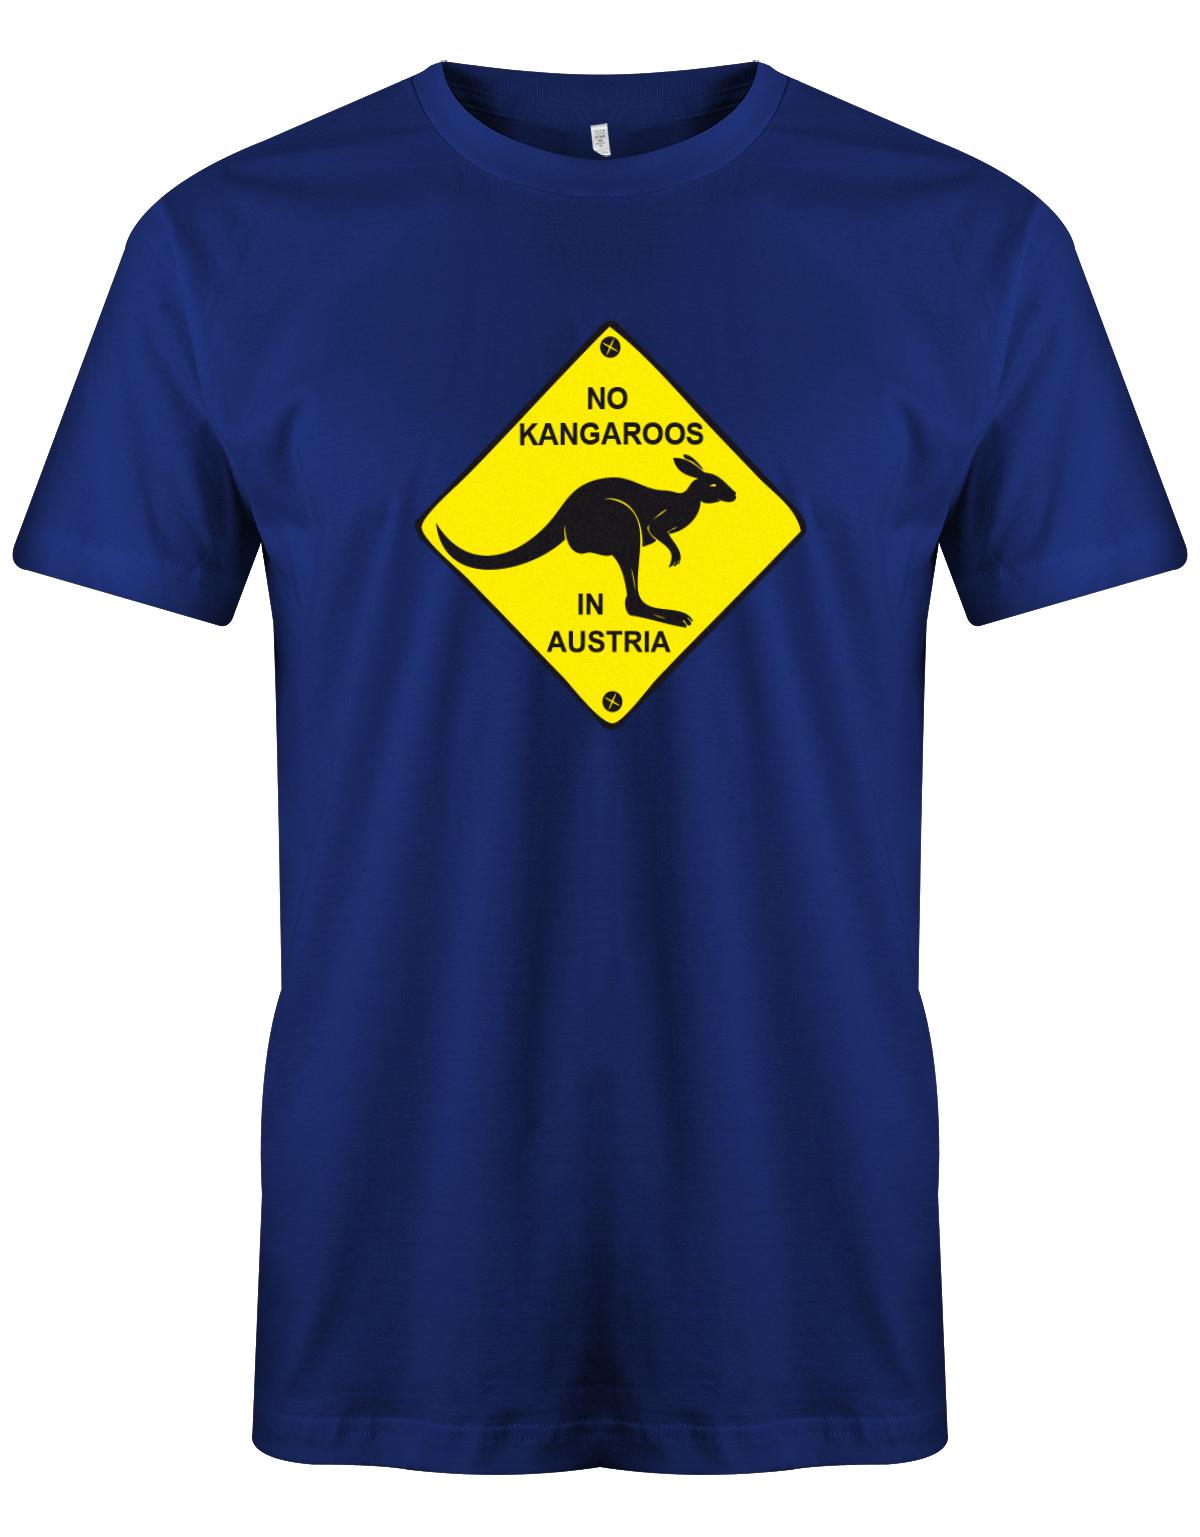 No-Kangaroos-in-Austria-Herren-Shirt-Royalblau